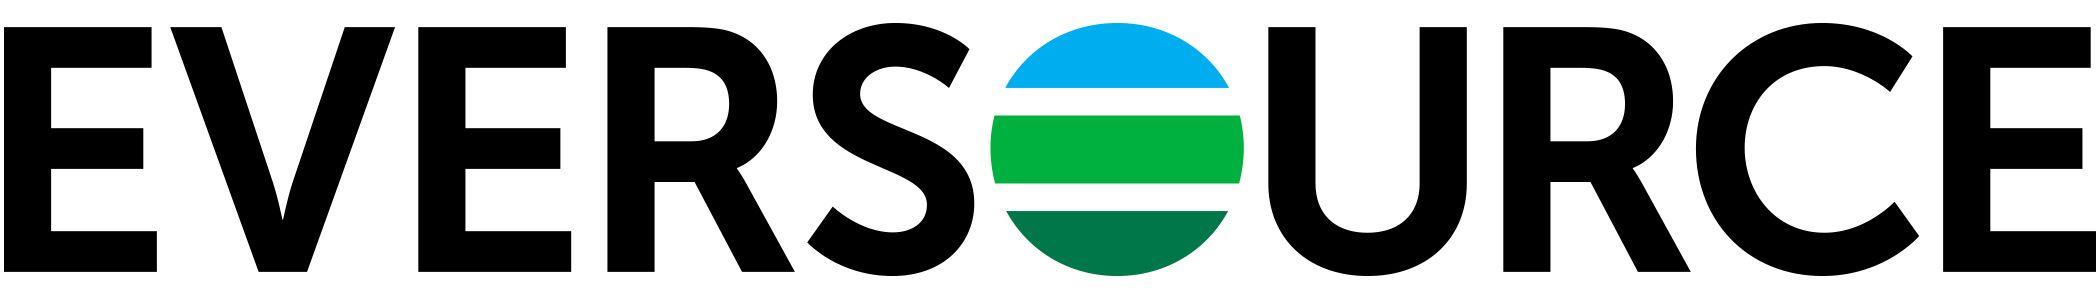 Eversource Logo - Eversource Logos